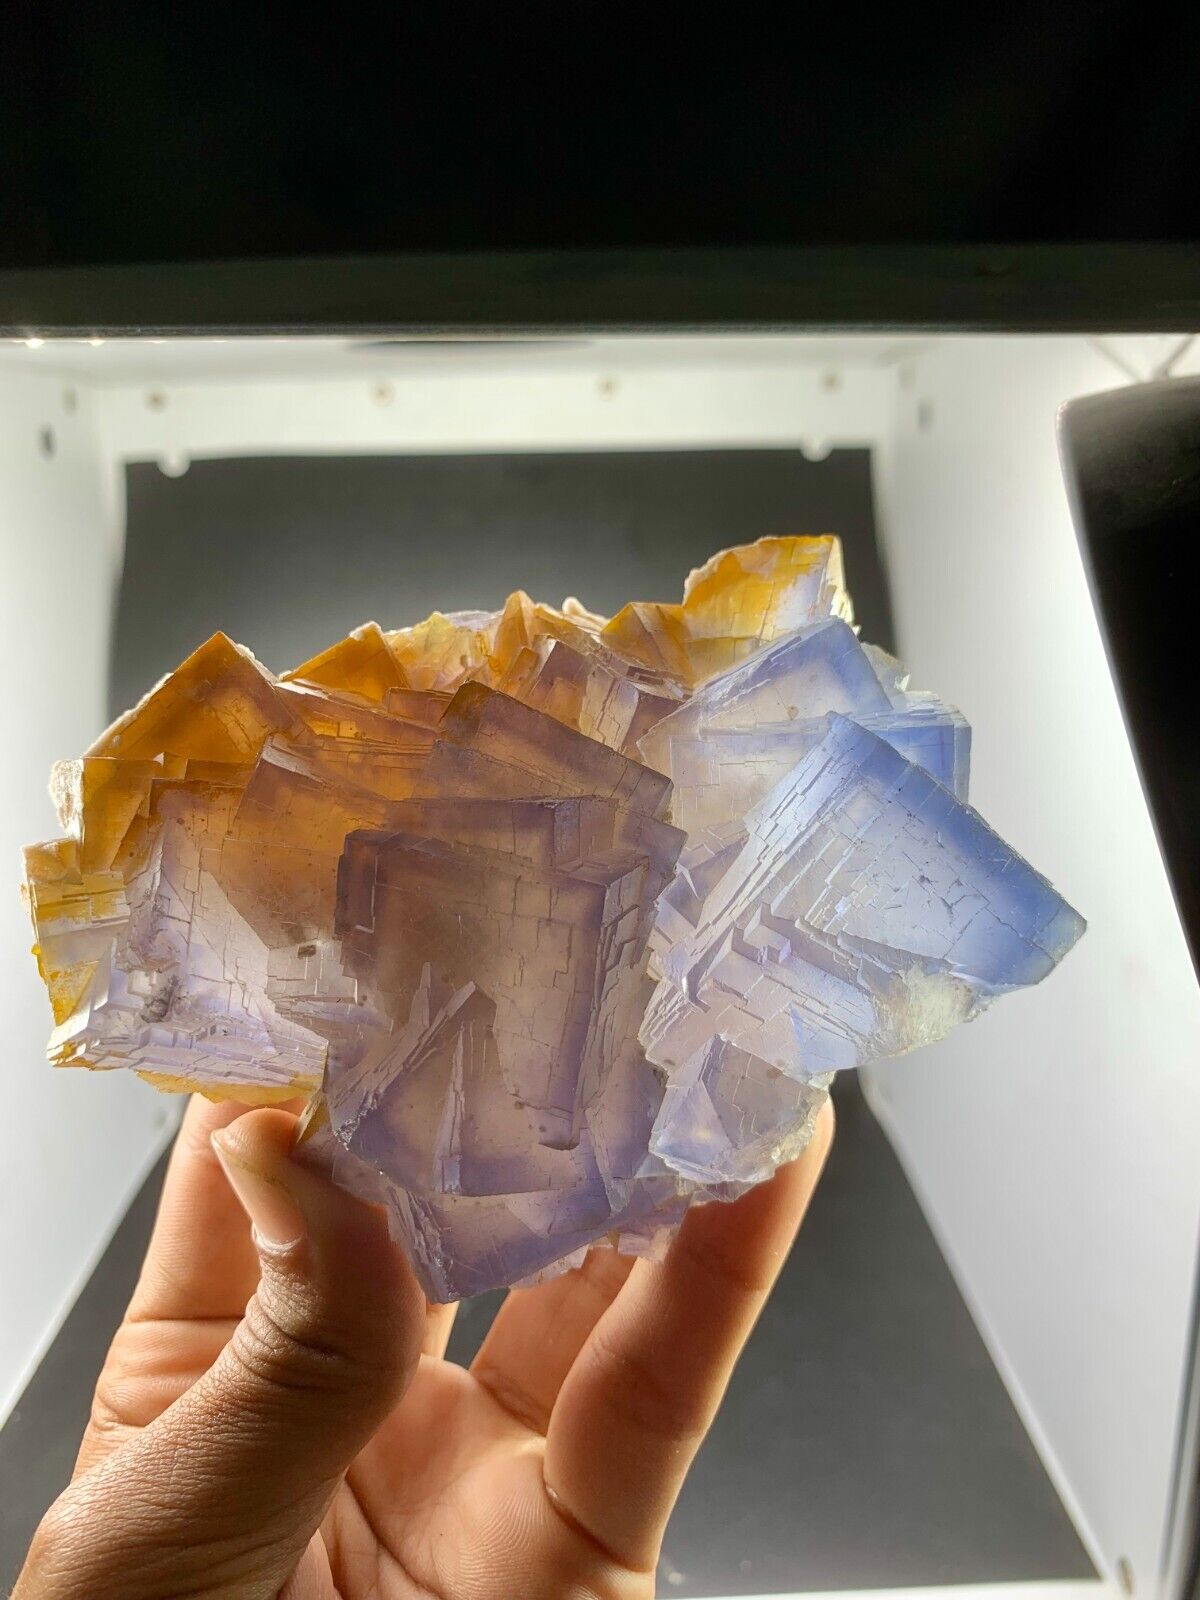 477 Gram Terminated and Undamaged Bluish cubic fluorite Phantom crystal specimen